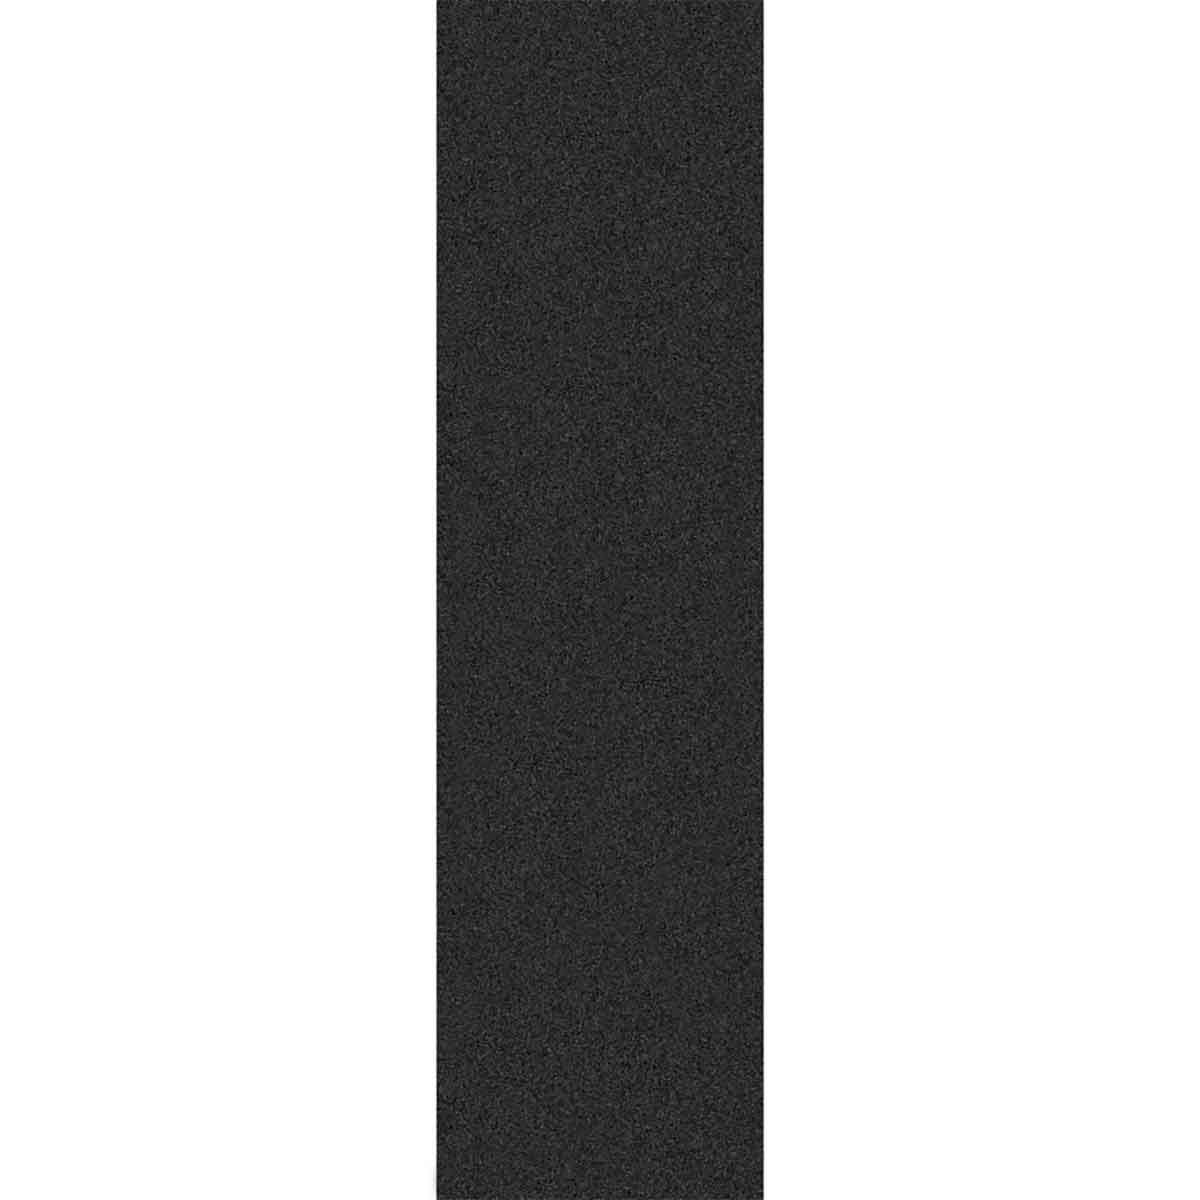 Jessup Jessup Ultra Griptape Roll 11"x60' Black 